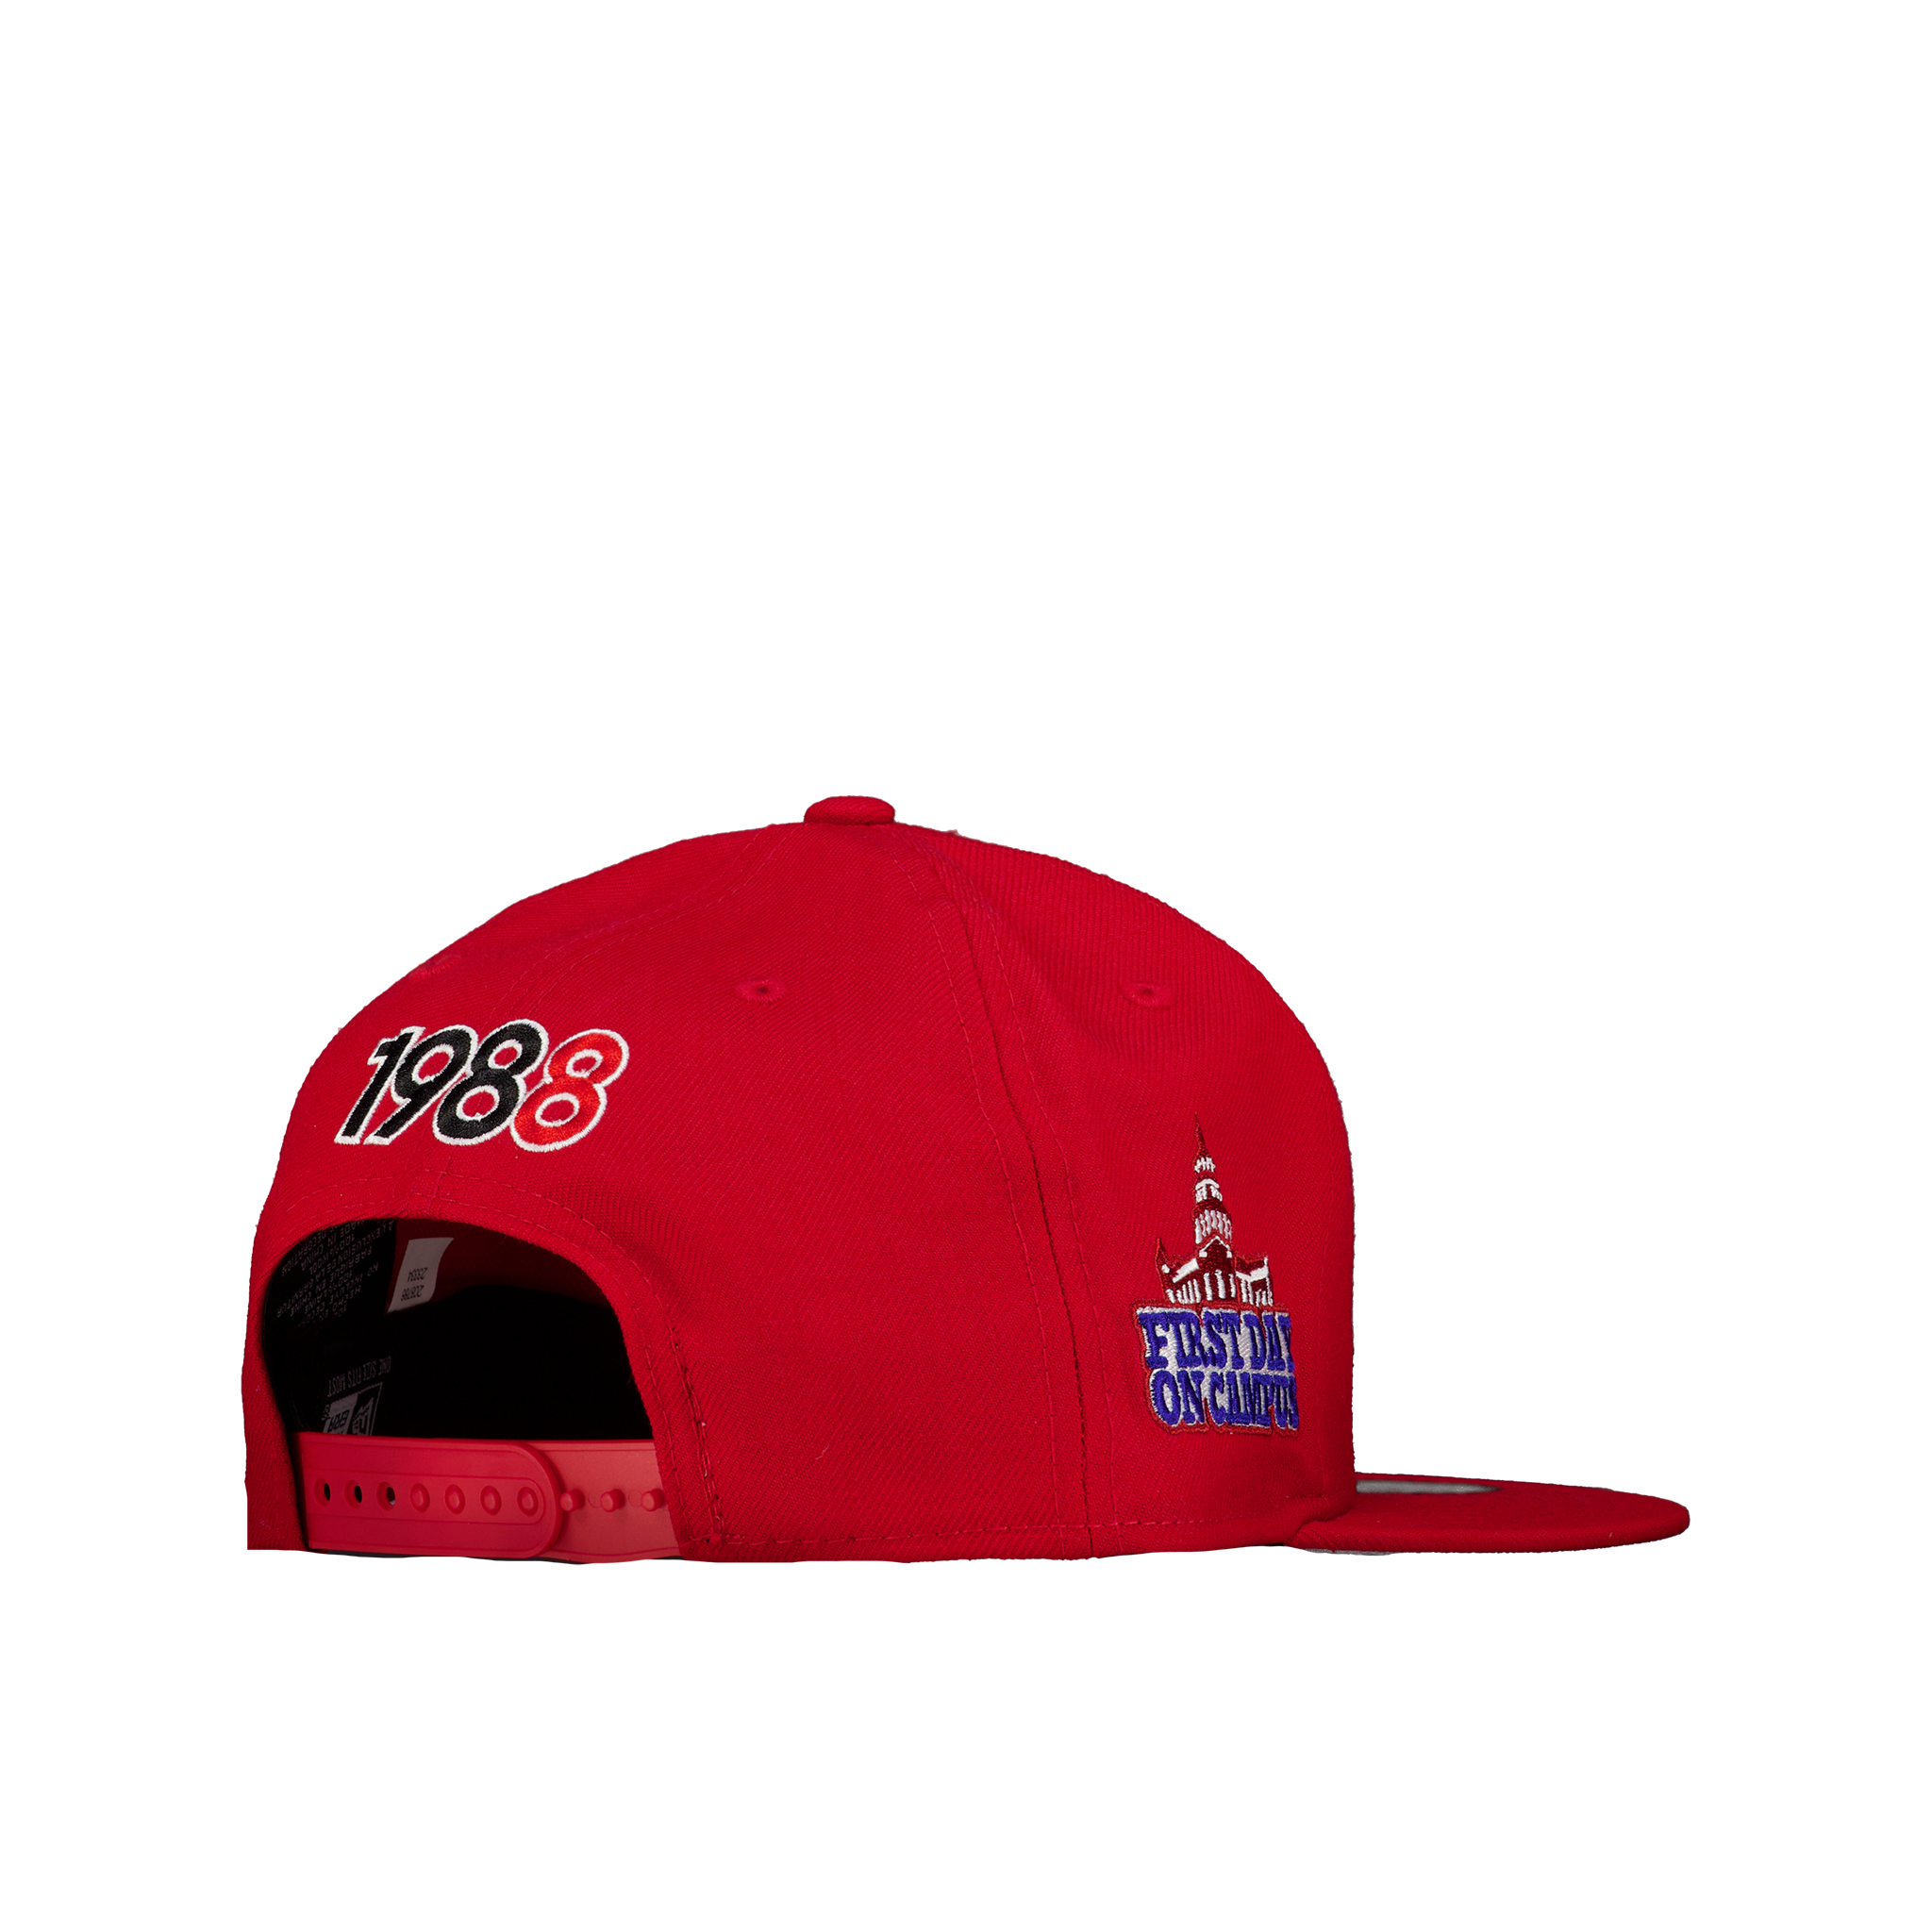 CAU New Era Hat